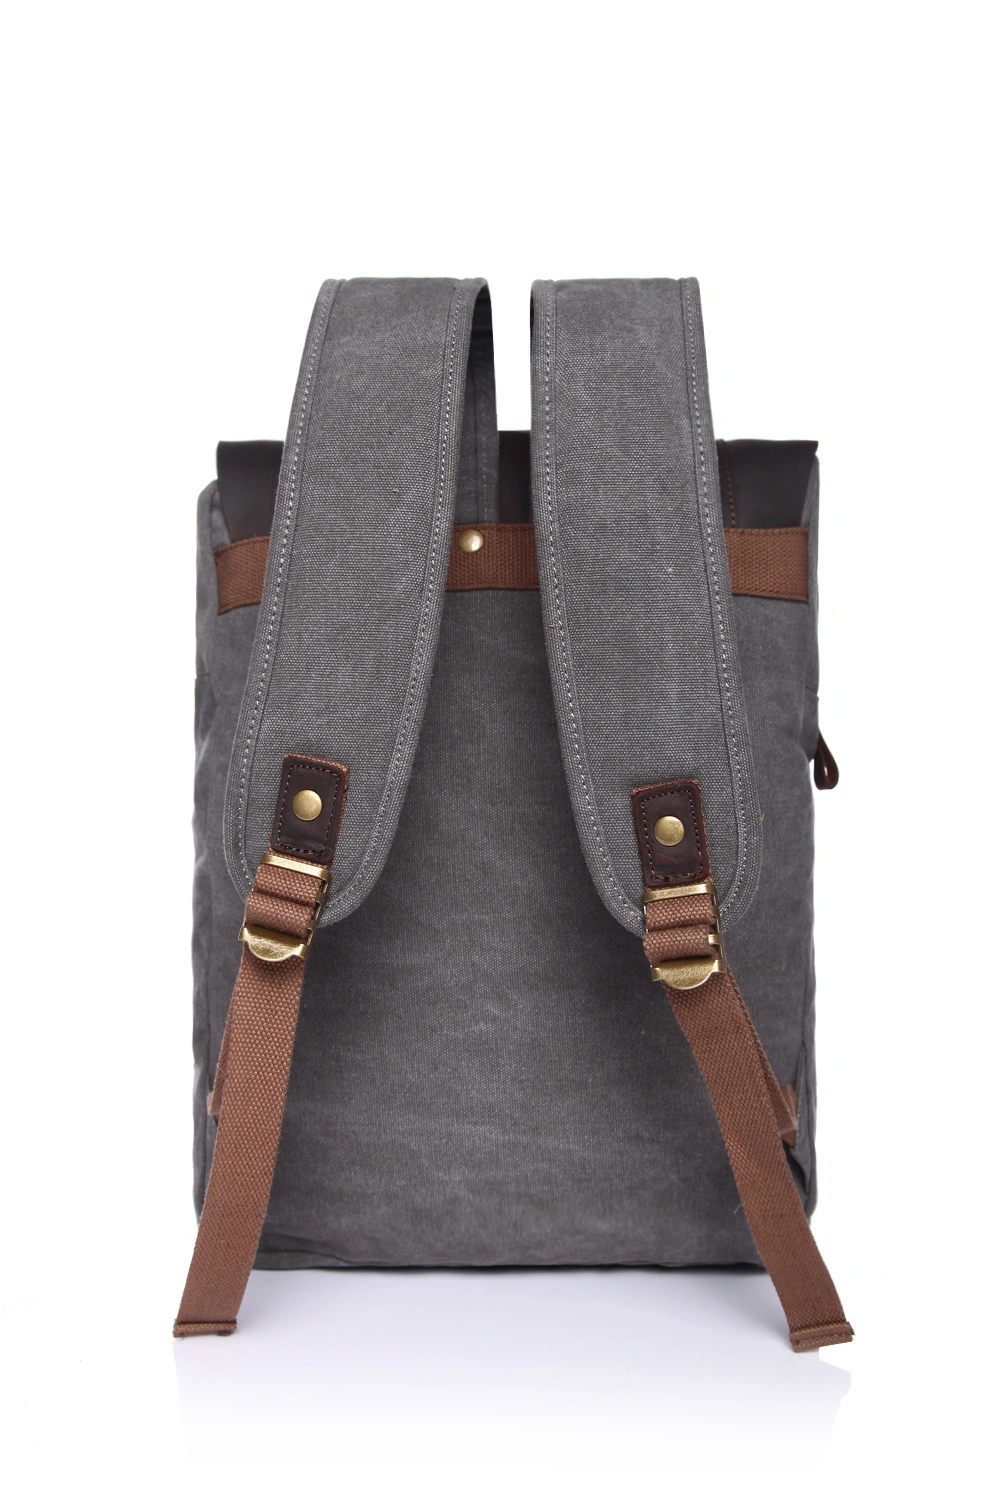 New Vintage Canvas Backpack Men's Fashion Outdoor Leather Backpack Laptop Bag